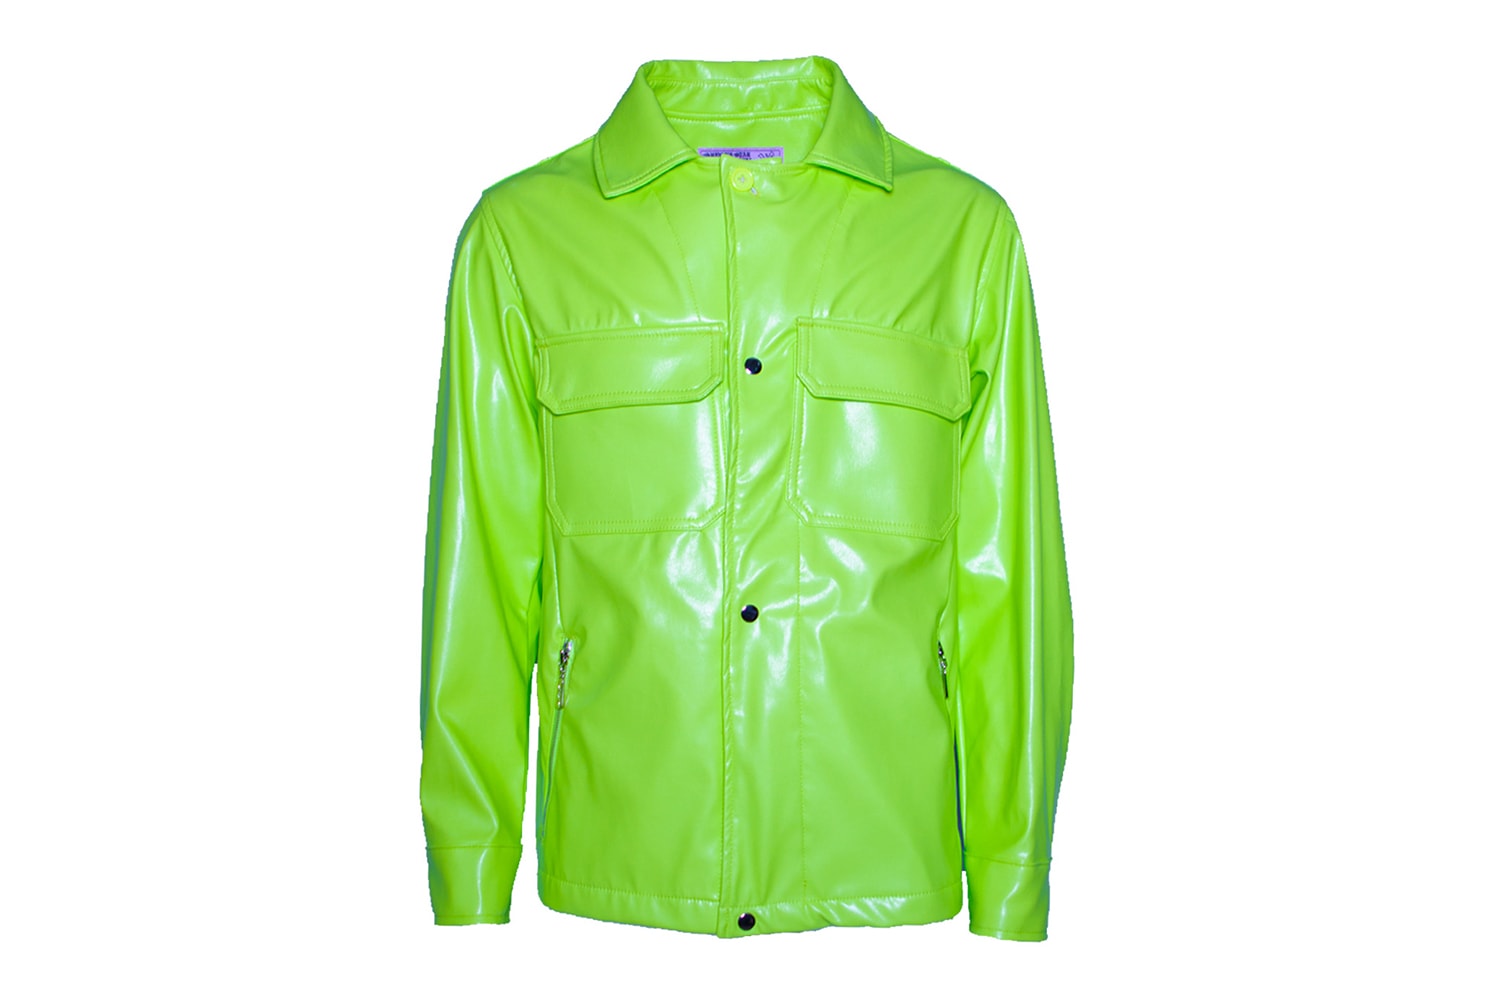 Lil Peep Rockstar Collection Release Firmé Atelier Work Jacket Flares Crossbody Bag Black Pink Green Info Buy Price